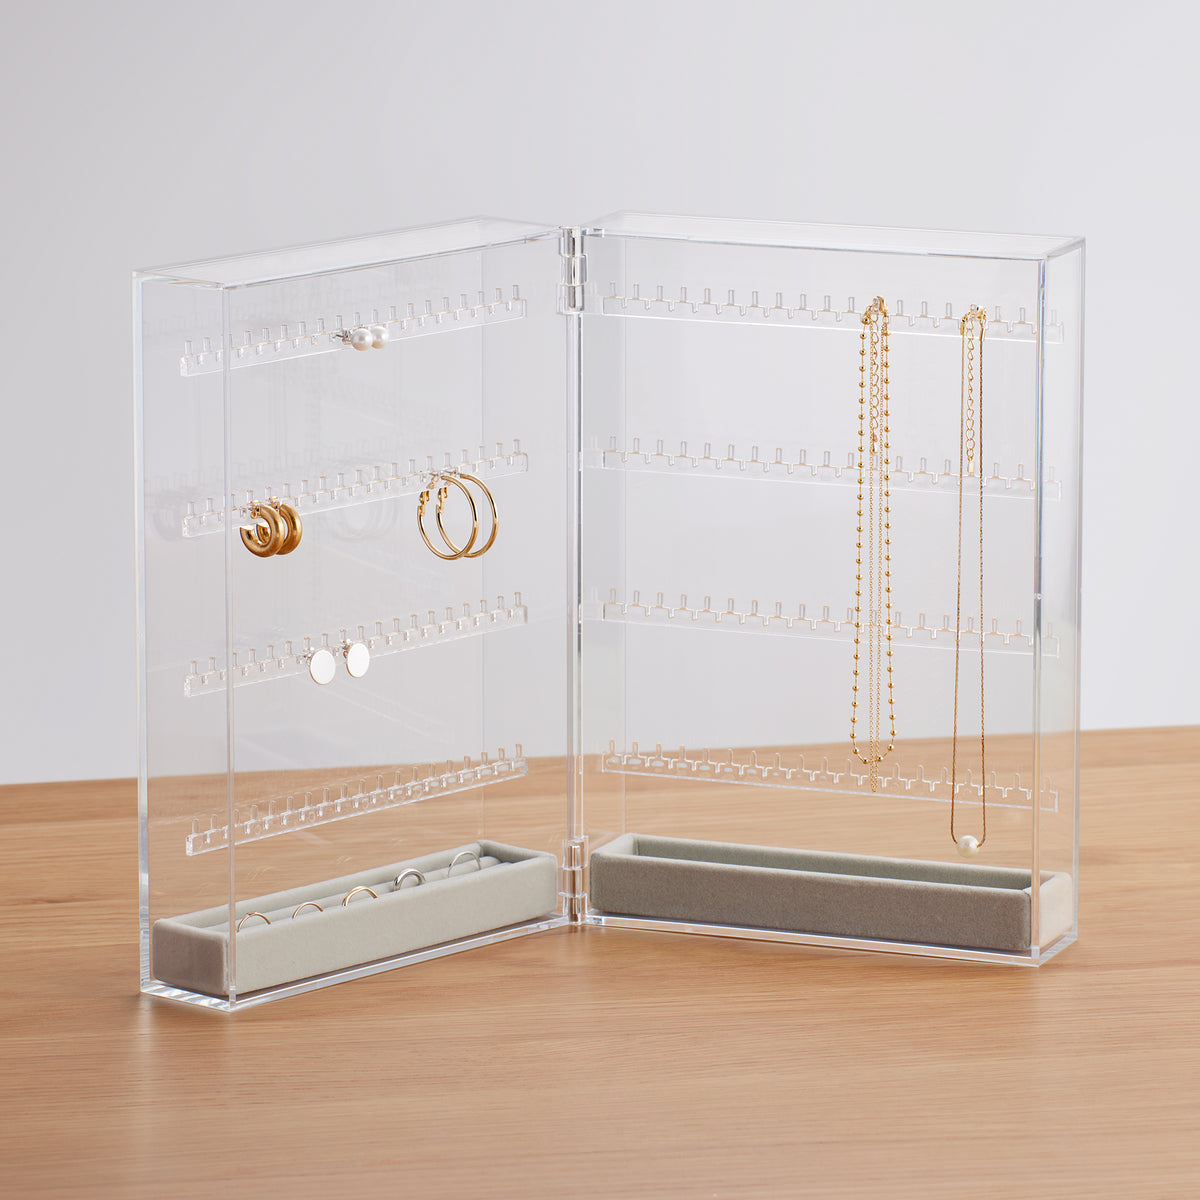 UNIQ Acrylic Jewelry Organizer Box, Earring Holder, Hanging Boxes